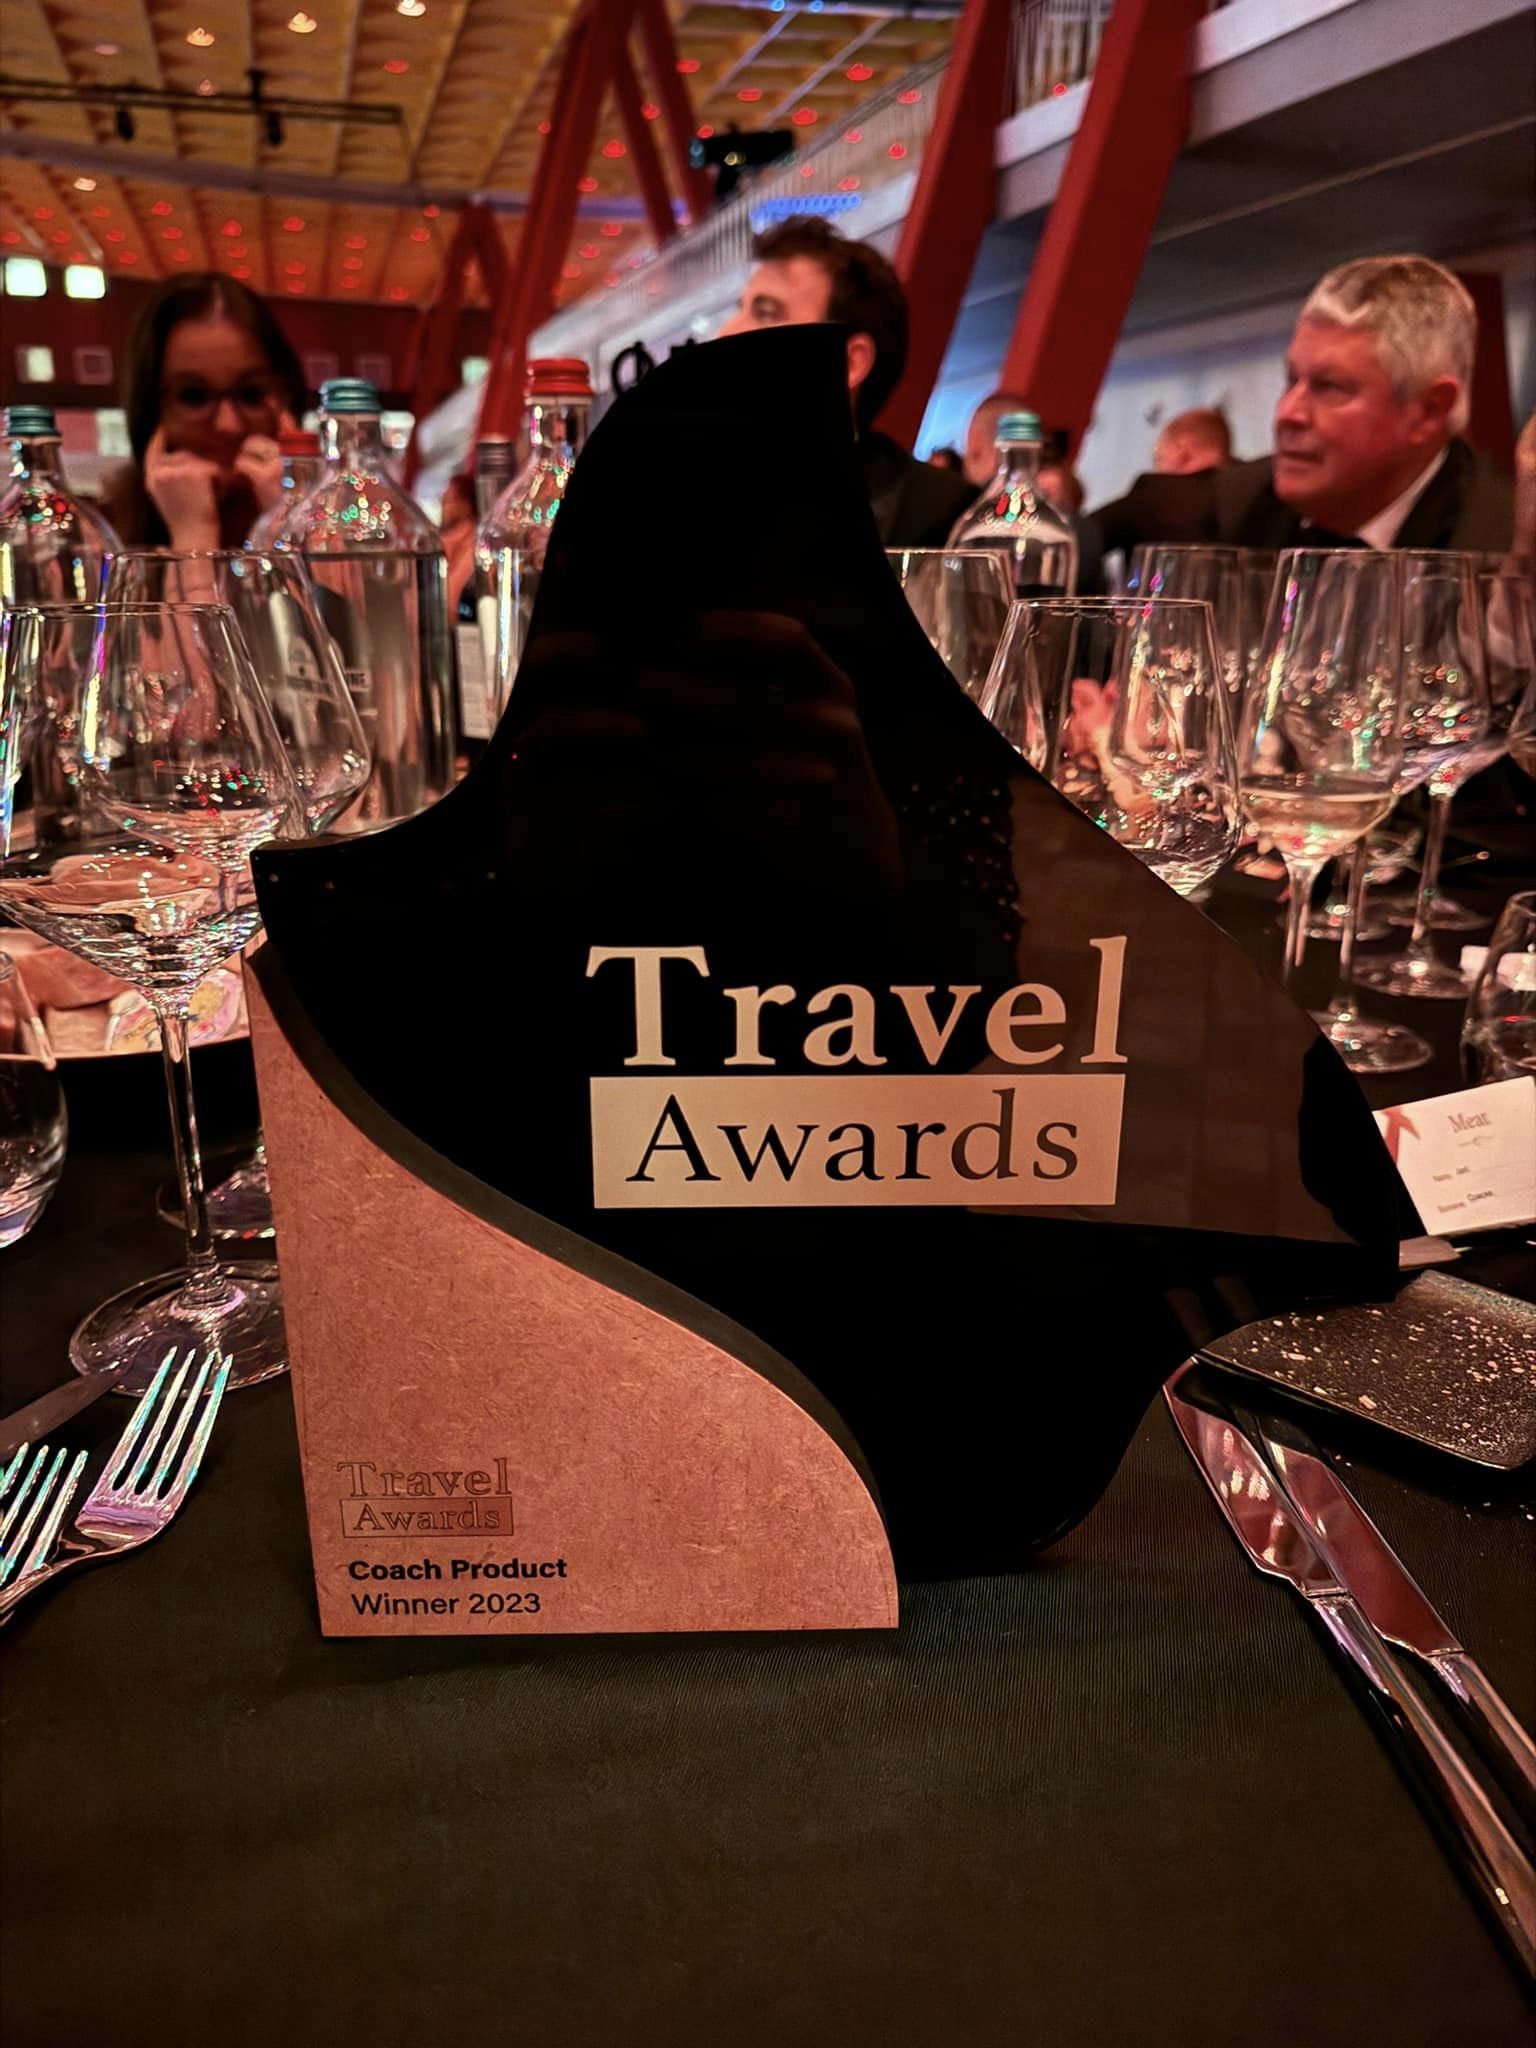 TM Travel Awards